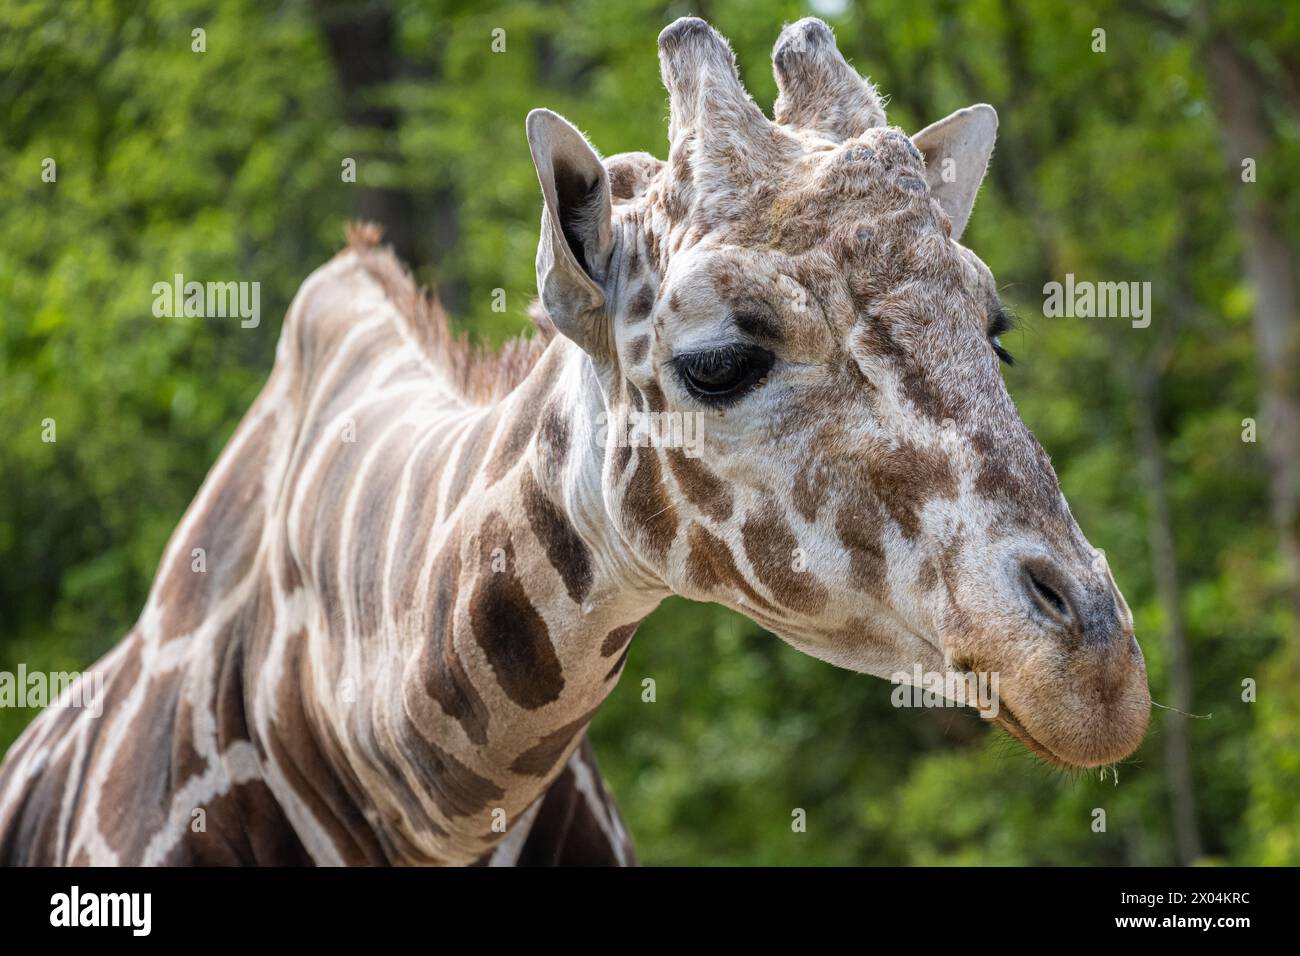 Reticulated giraffe (Giraffa camelopardalis reticulata) at the Birmingham Zoo in Birmingham, Alabama. (USA) Stock Photo